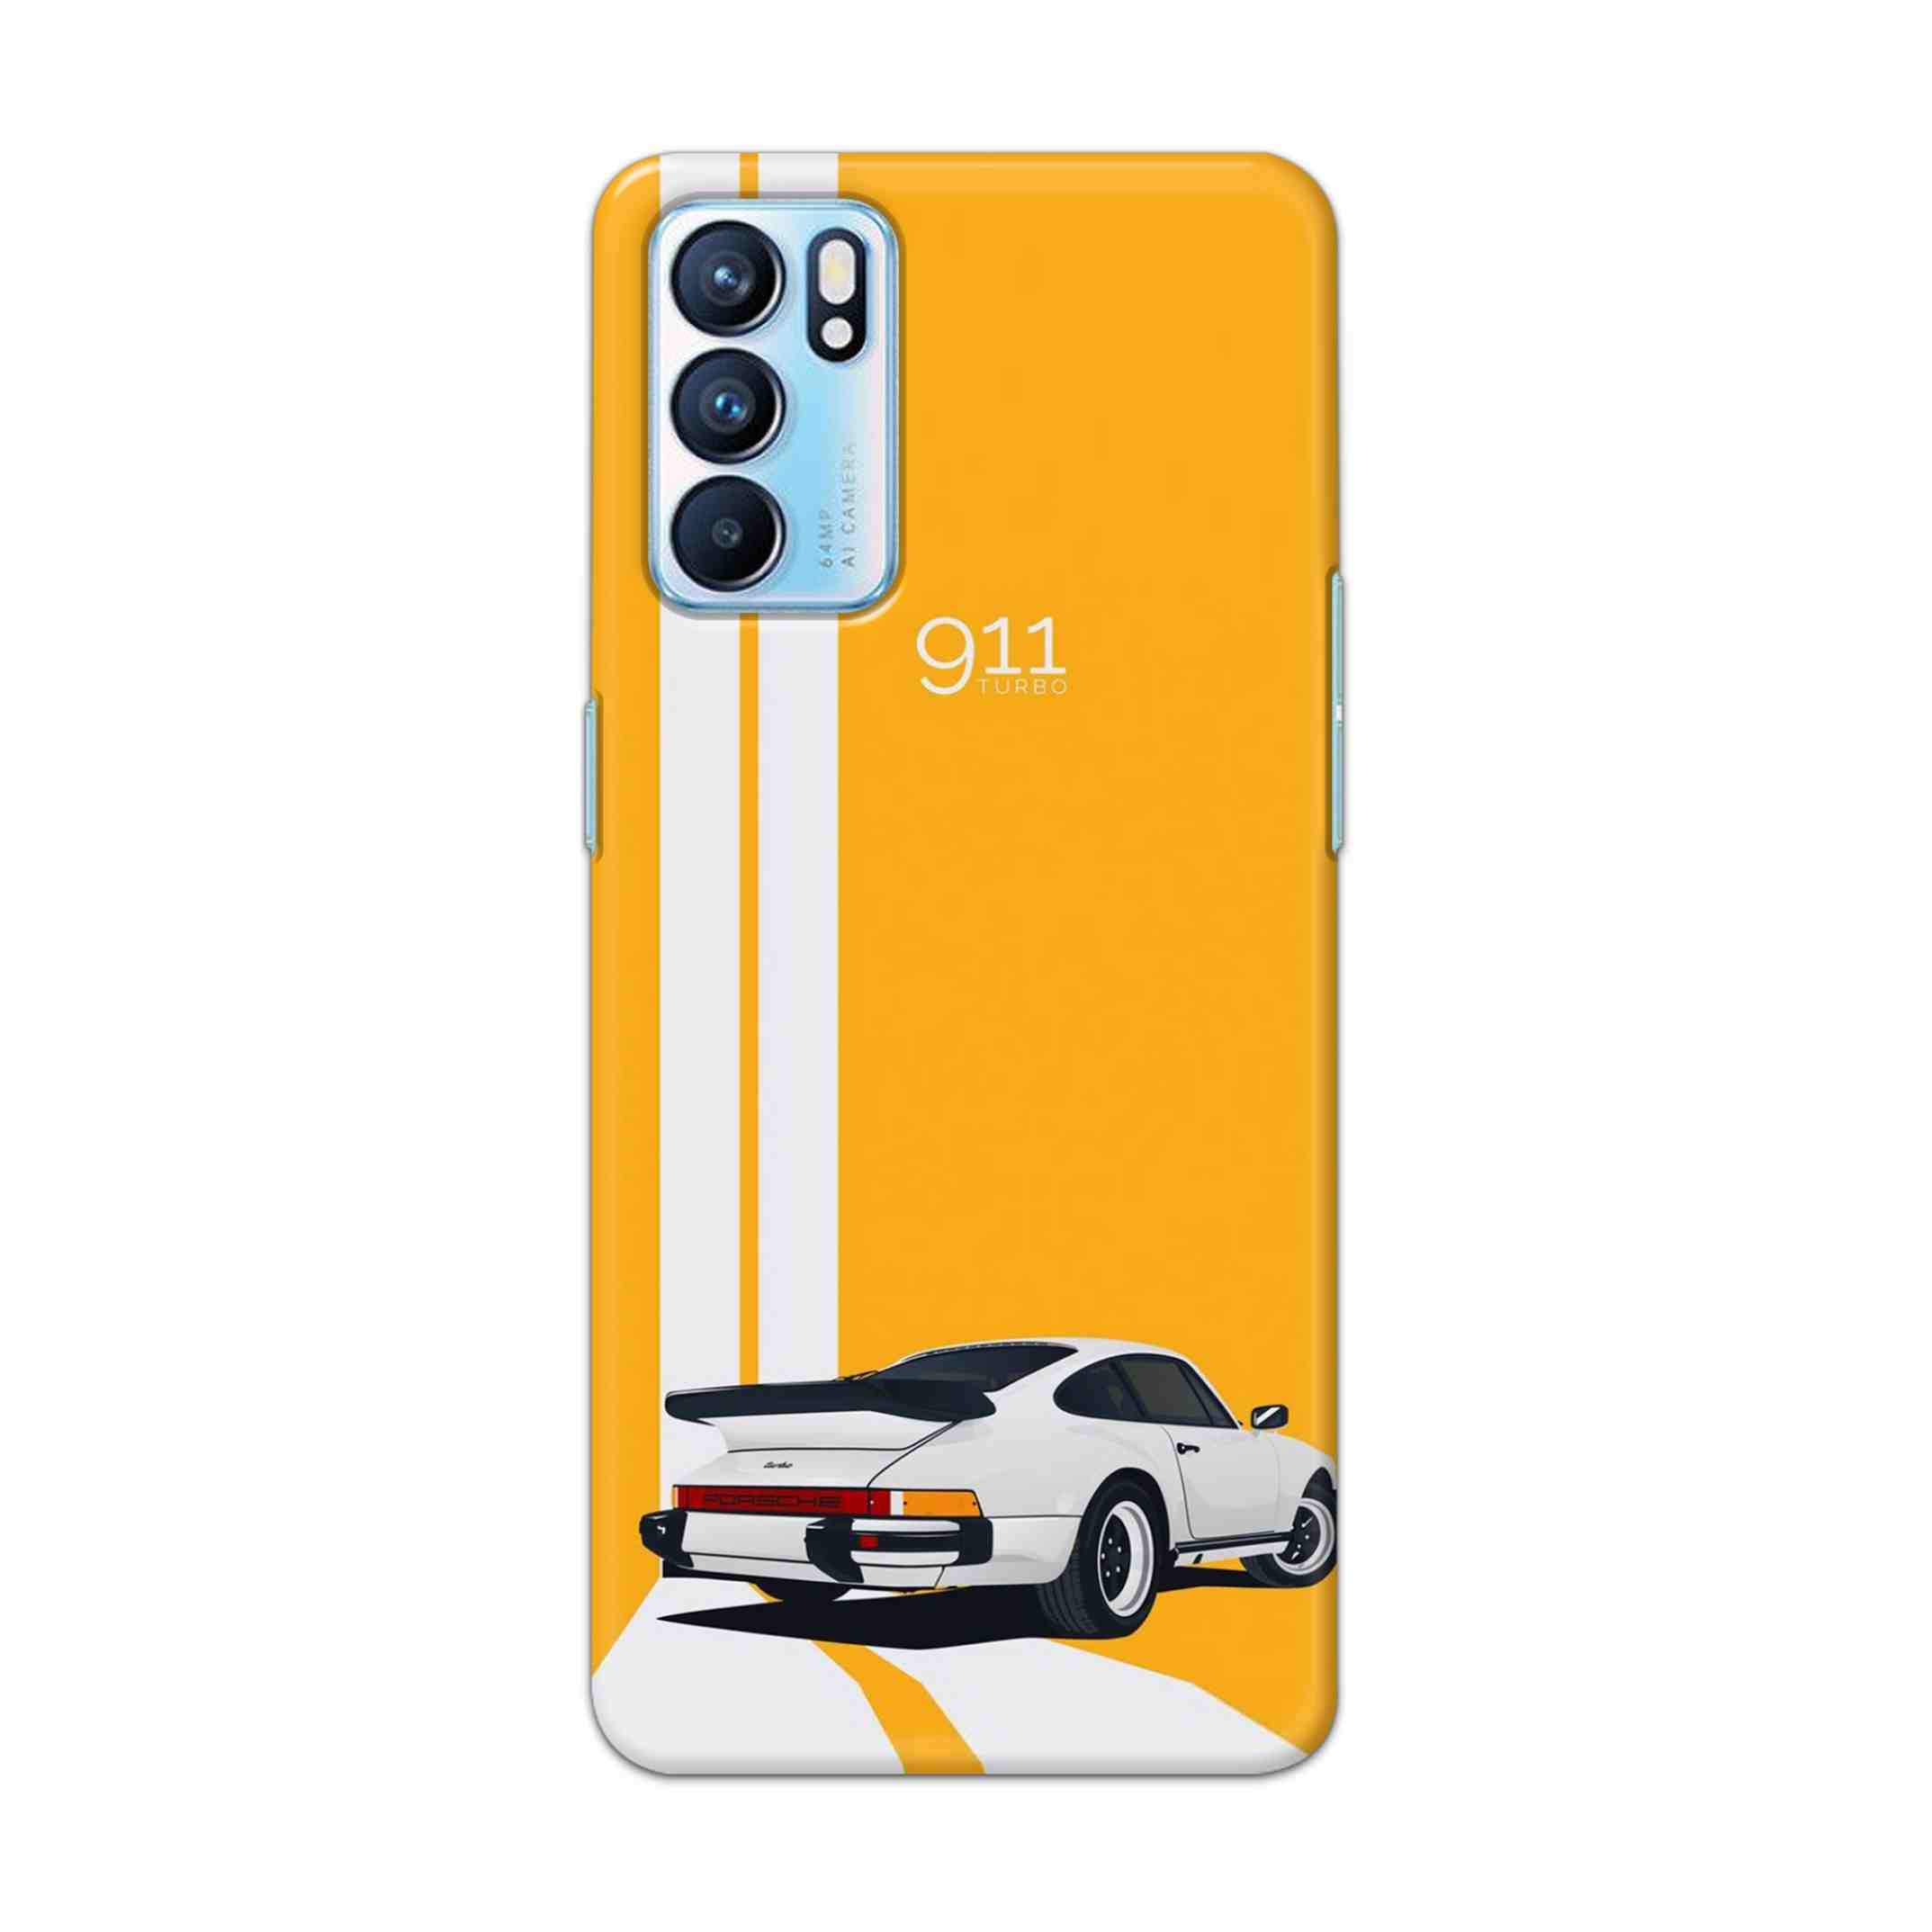 Buy 911 Gt Porche Hard Back Mobile Phone Case Cover For OPPO RENO 6 Online